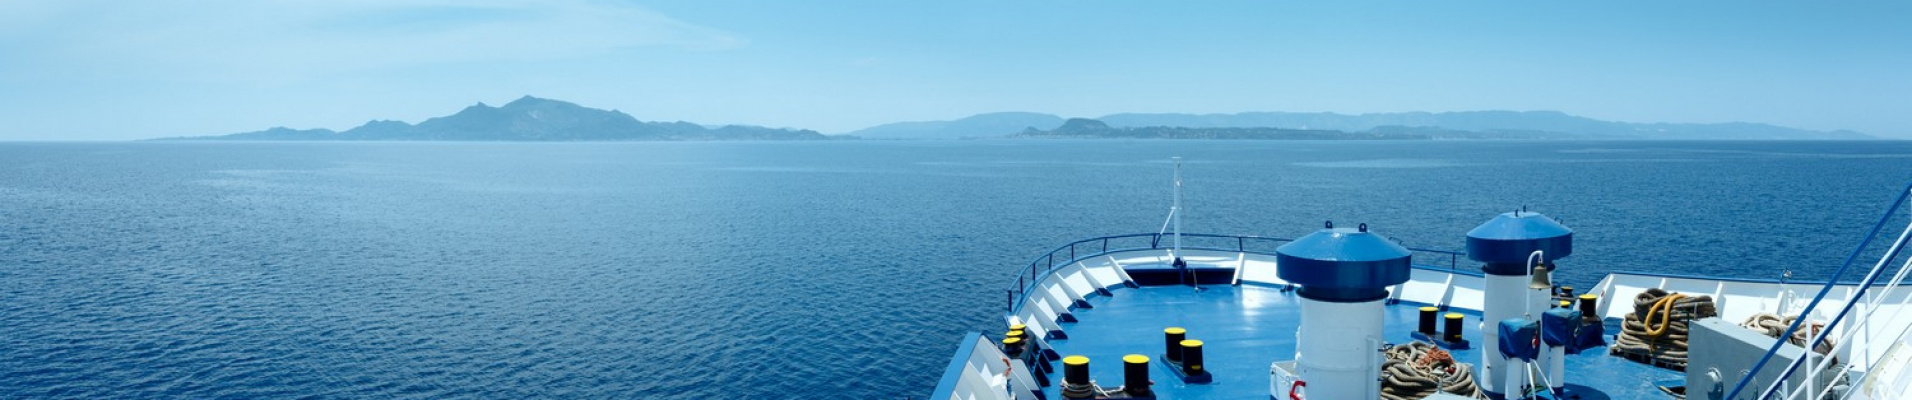 greece-ferry